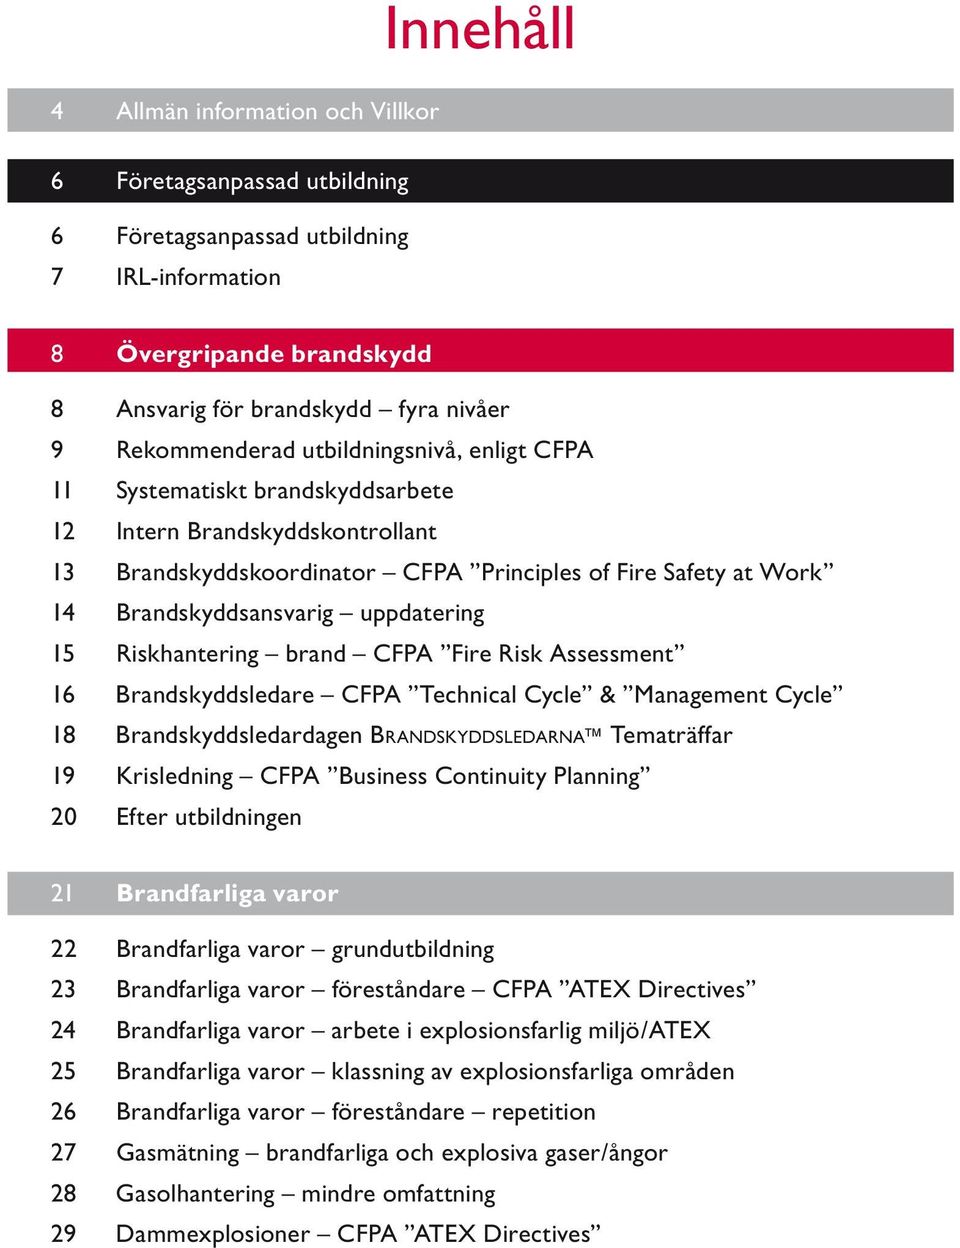 uppdatering 15 Riskhantering brand CFPA Fire Risk Assessment 16 Brandskyddsledare CFPA Technical Cycle & Management Cycle 18 Brandskyddsledardagen Br a n d s k y d d s l e d a r n a Tematräffar 19